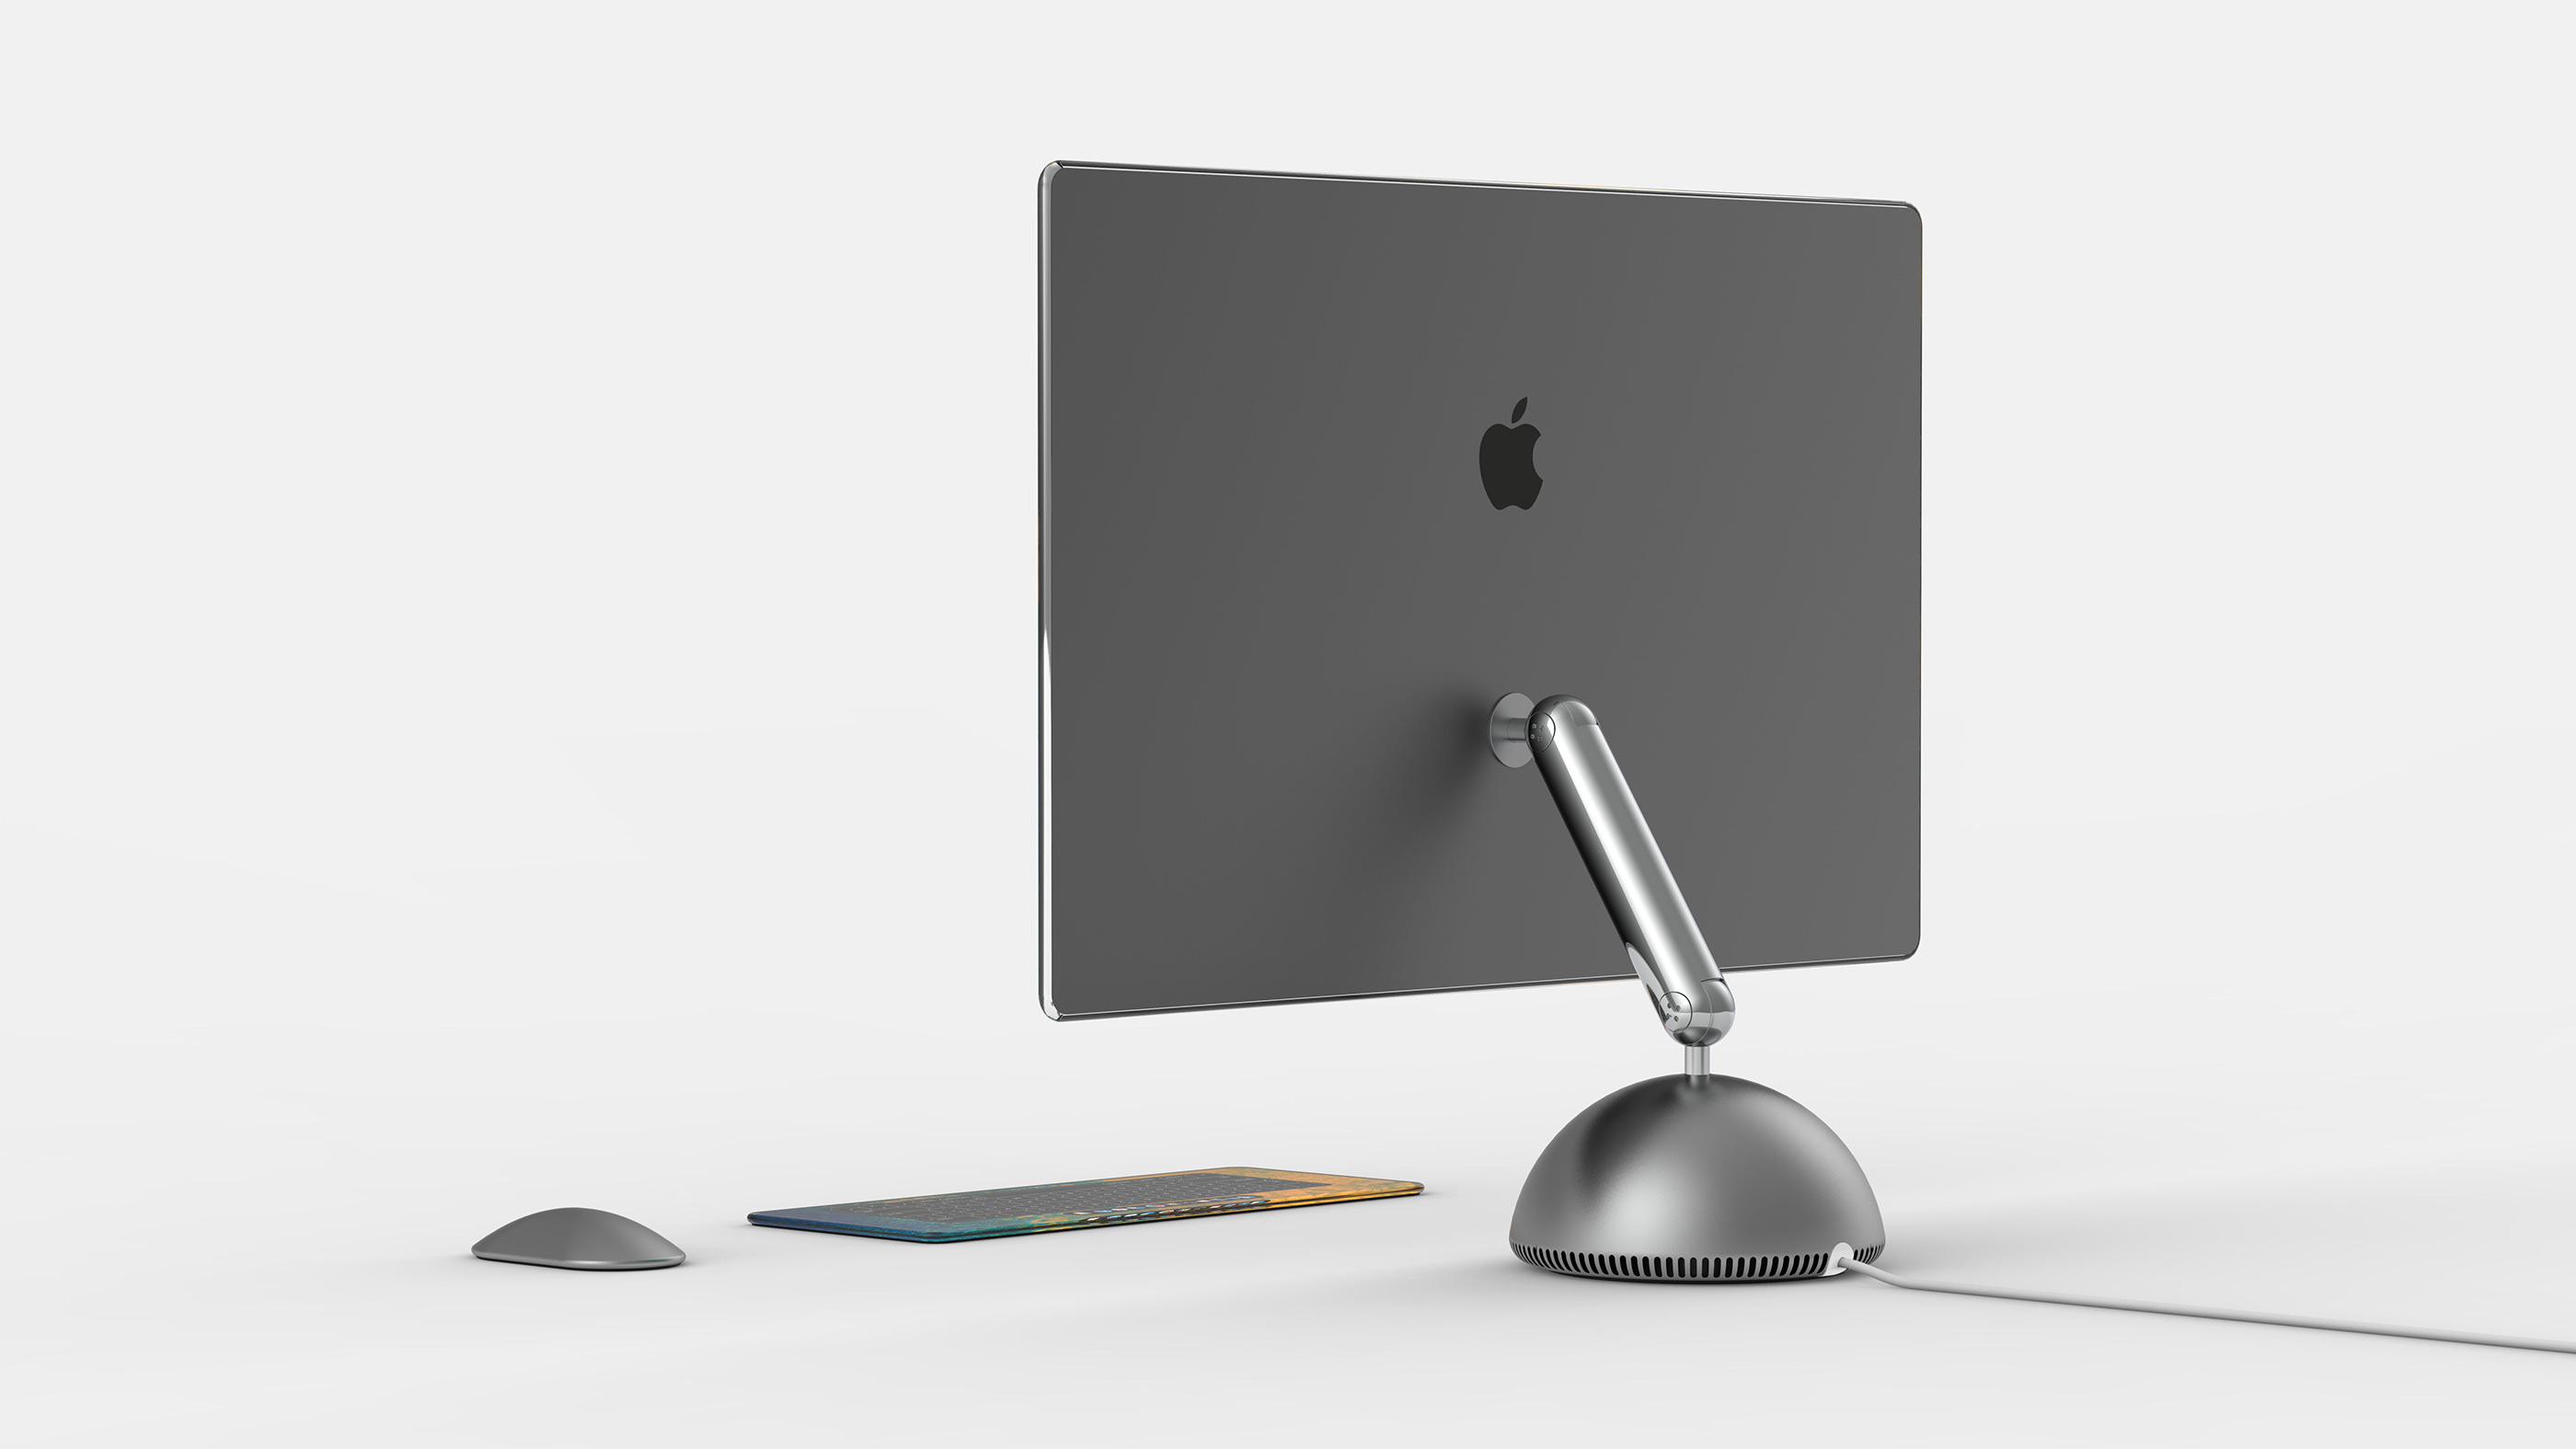 iMac Concept